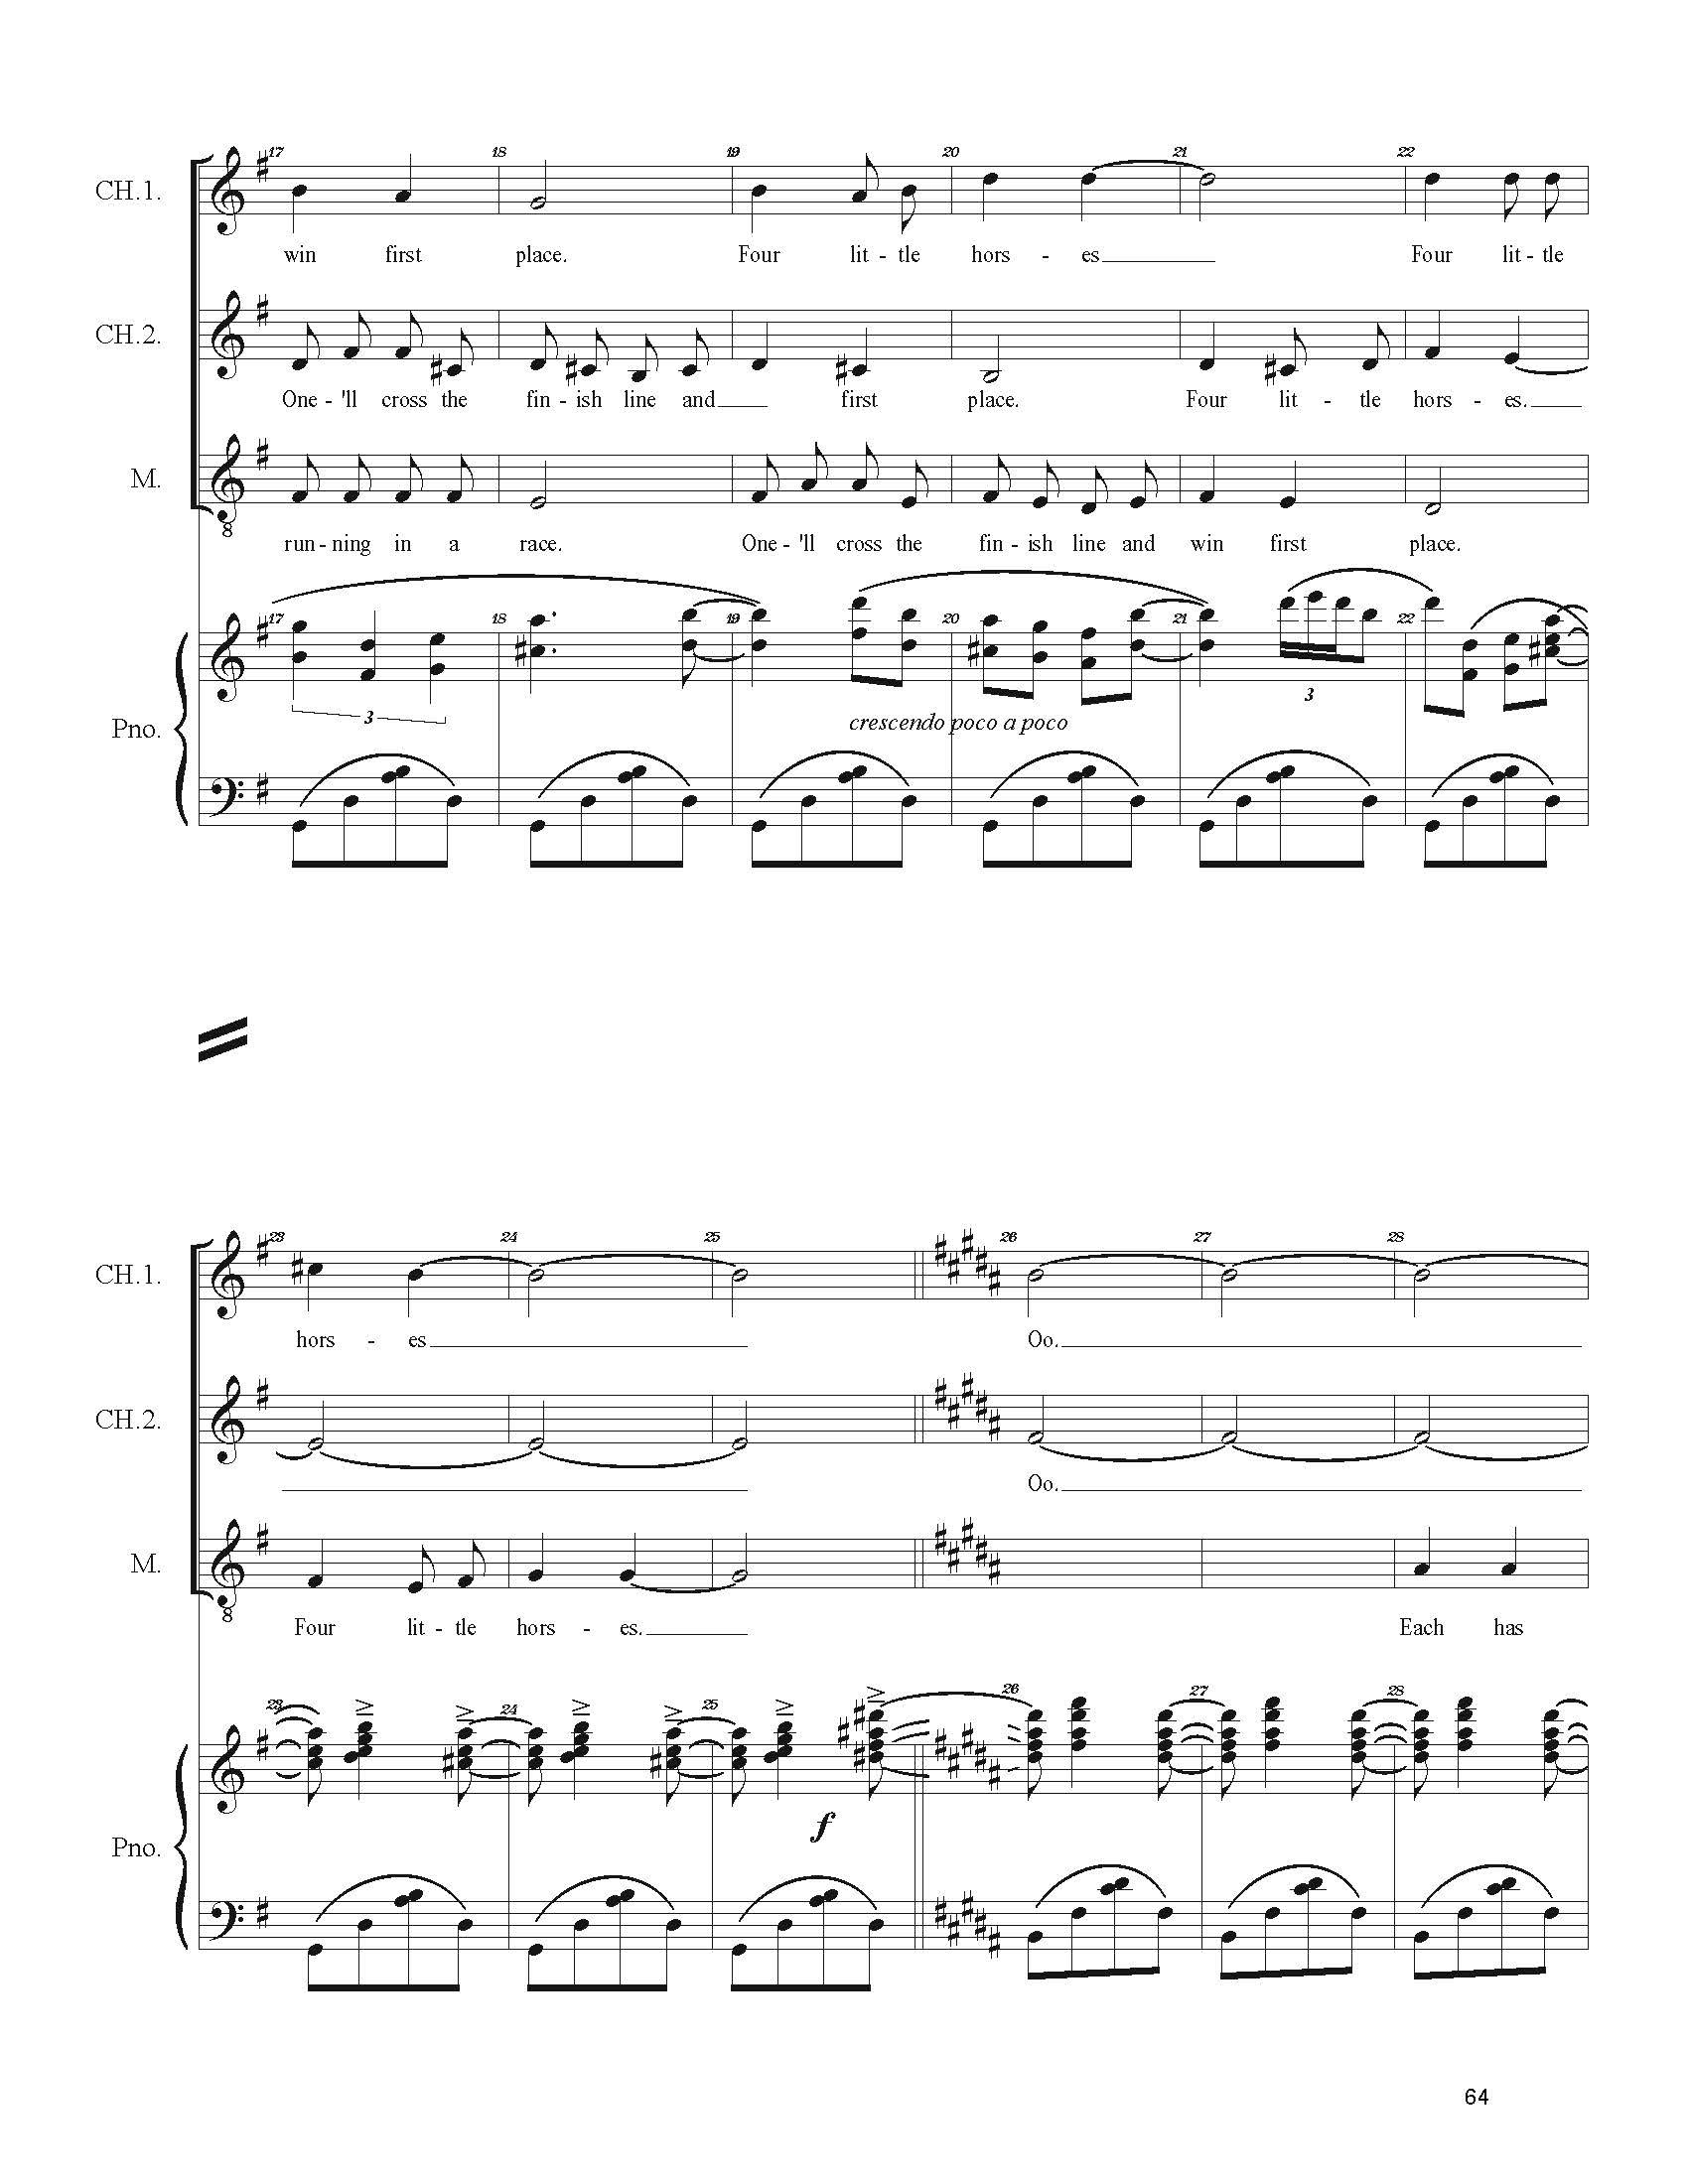 FULL PIANO VOCAL SCORE DRAFT 1 - Score_Page_064.jpg